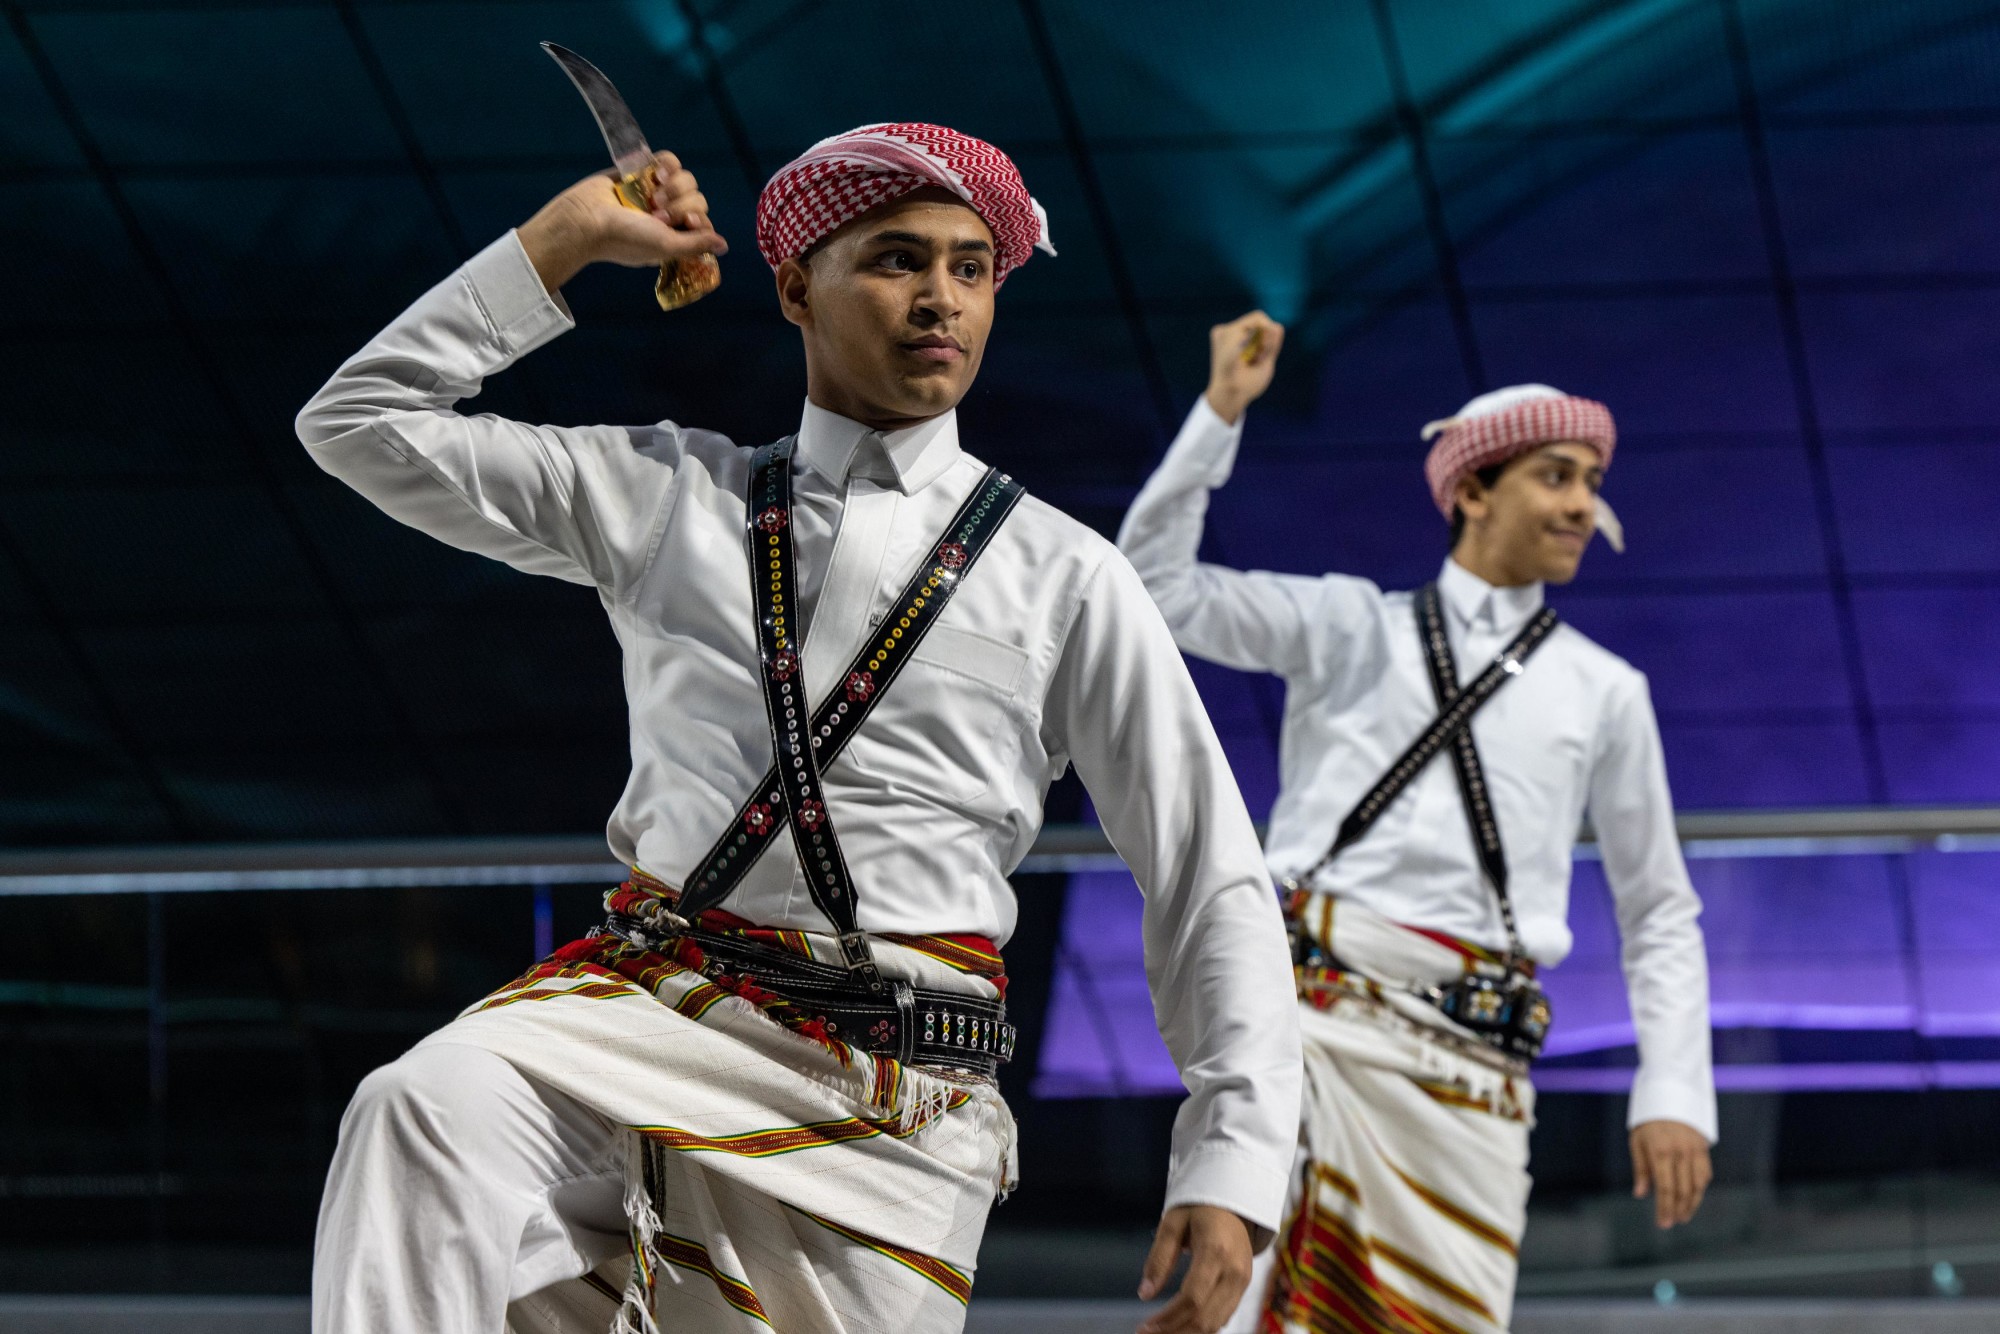 Saudi Folklore Performance at the Kingdom of Saudi Arabia Pavilion m3956